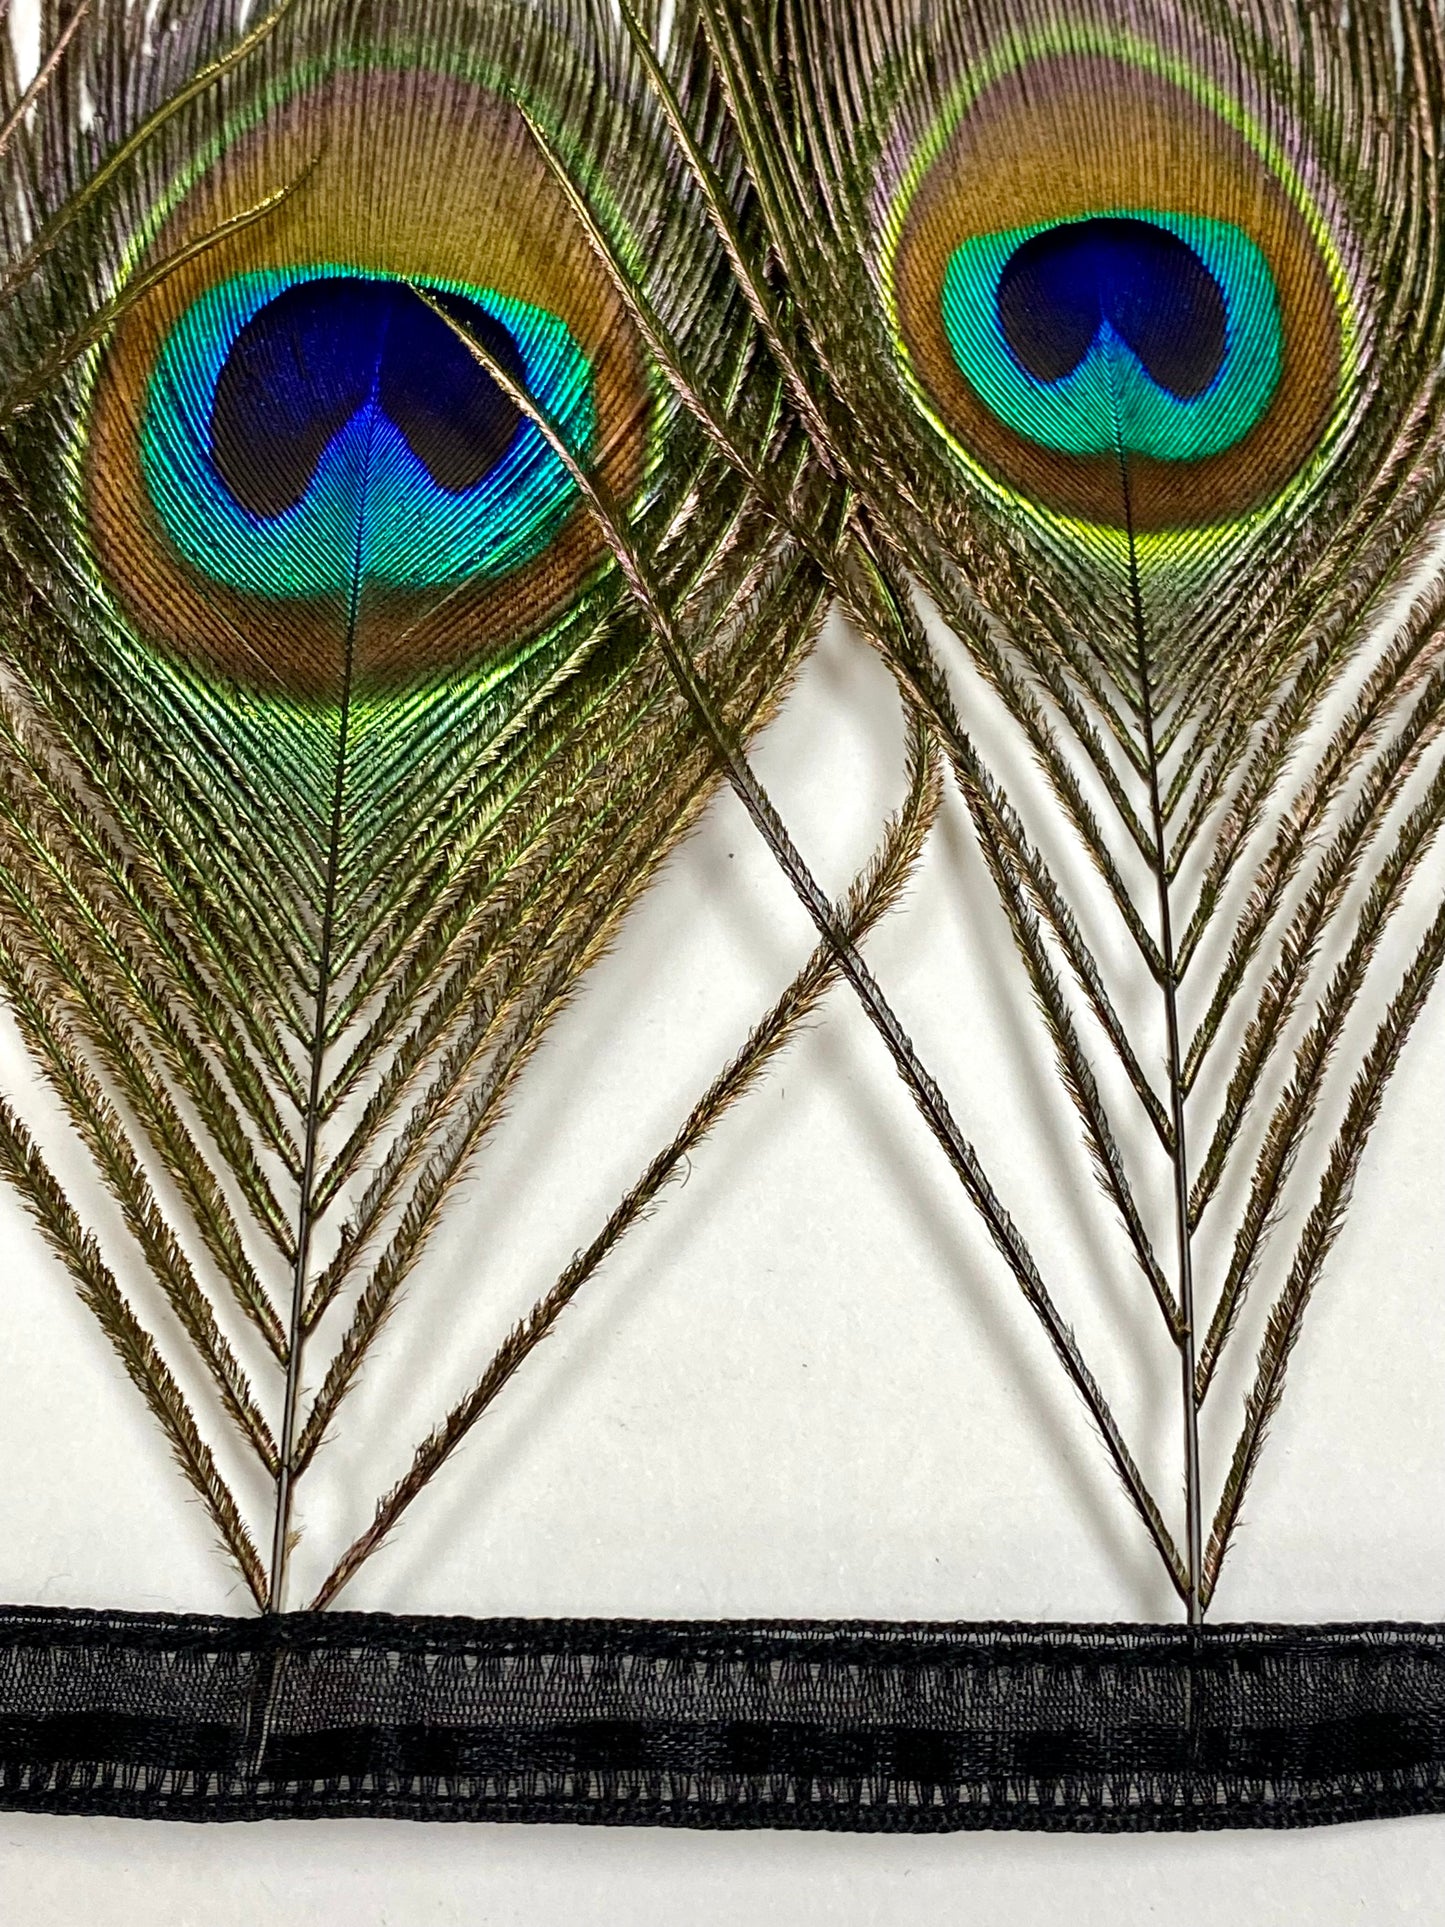 Peacock Eye on Bias Tape